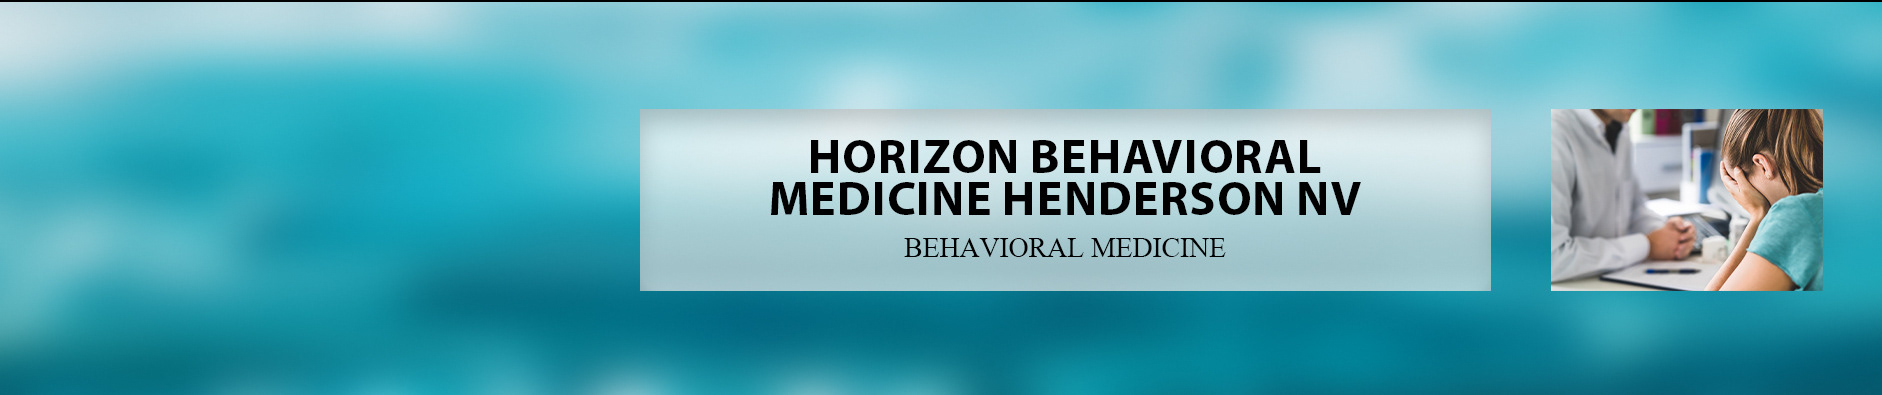 Horizon Behavioral Medicine Henderson, NV's profile banner